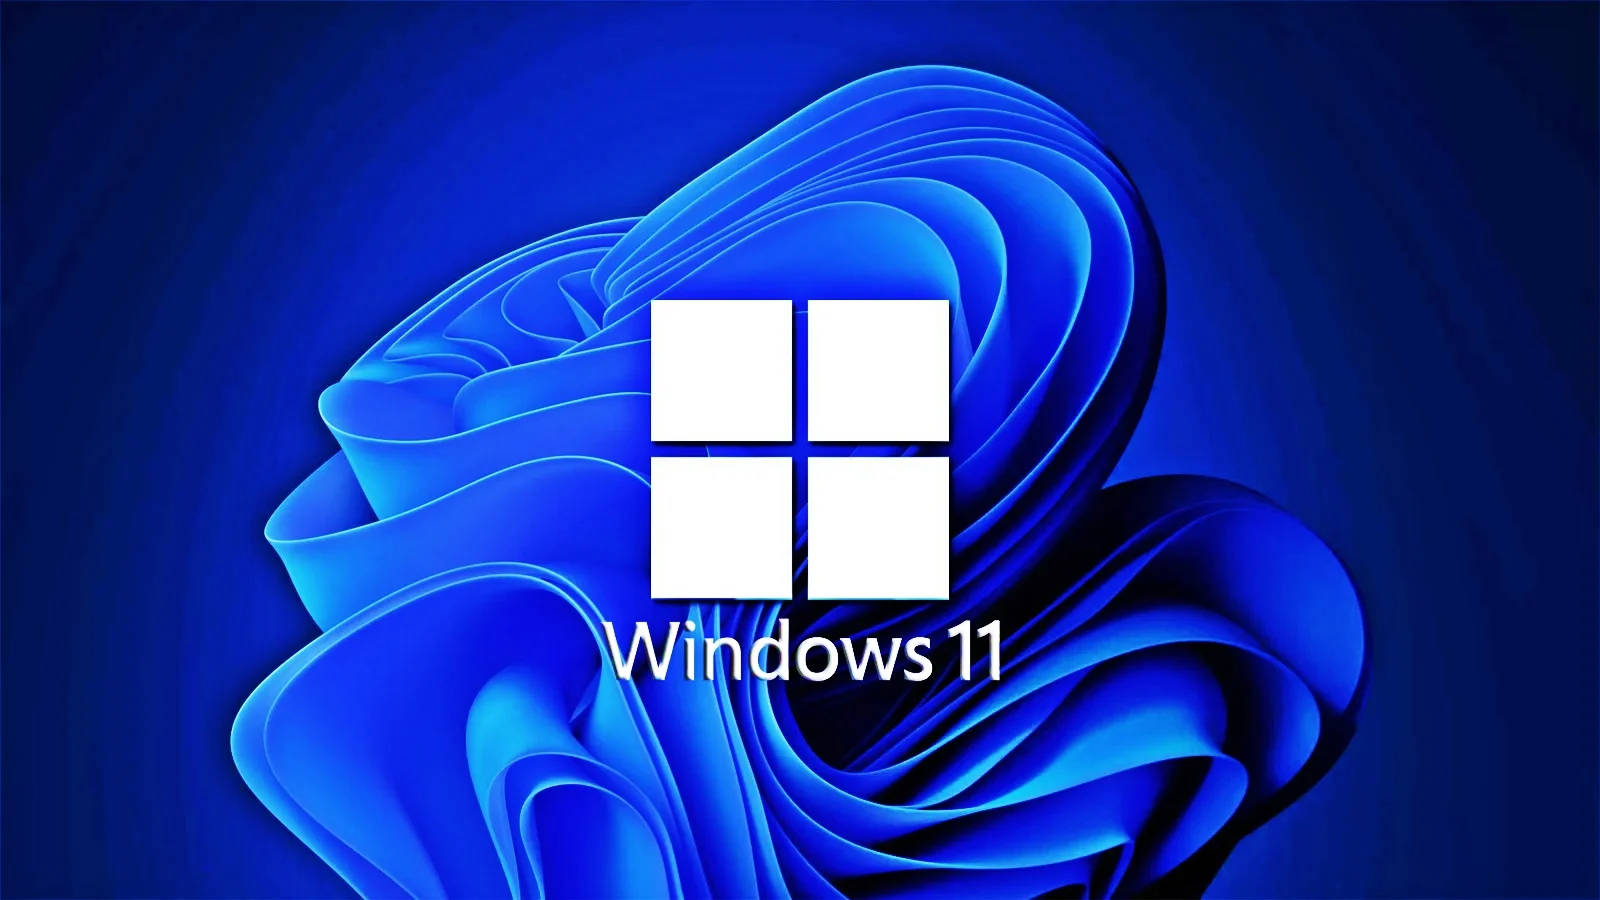 Sfondooriginale Di Windows 11 Con Nastro Blu Sfondo